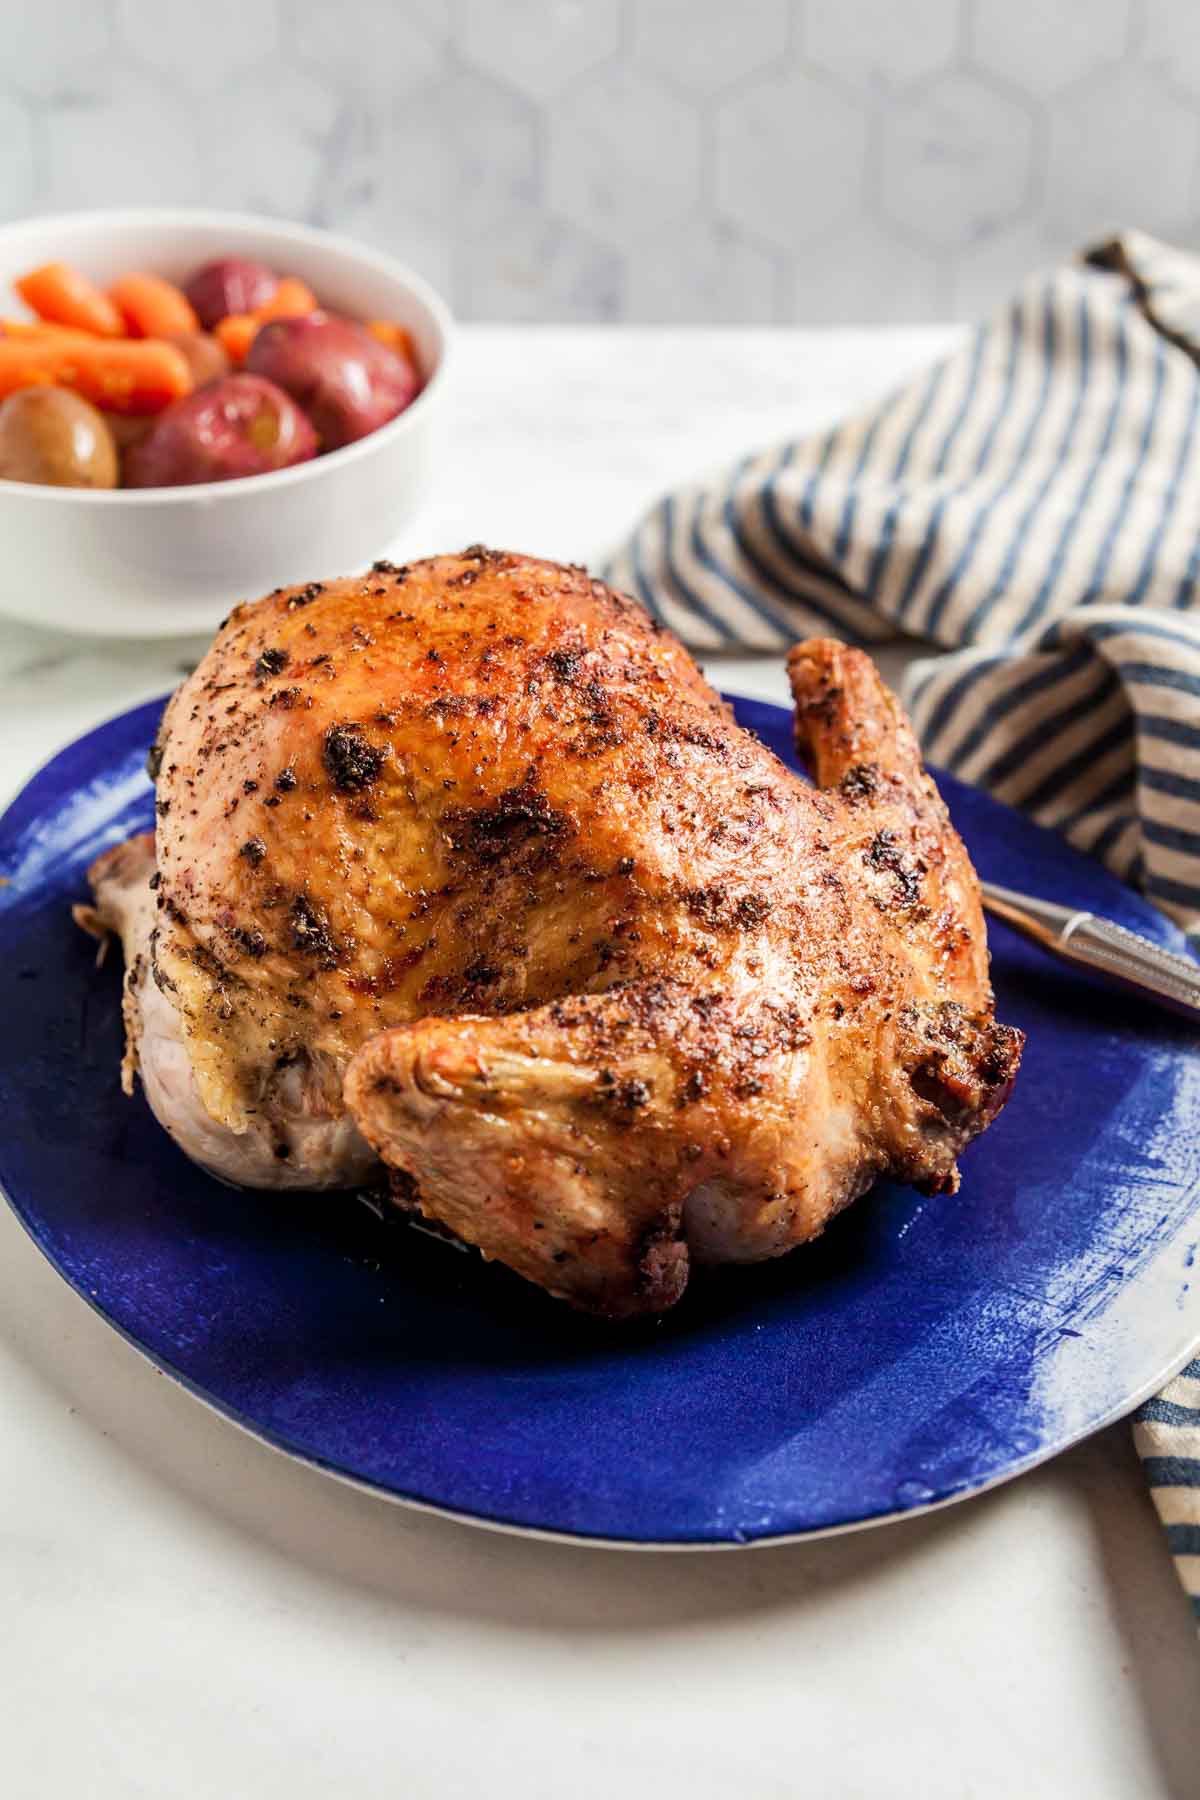 https://www.healthy-delicious.com/wp-content/uploads/2021/10/air-fryer-roast-chicken-8.jpg